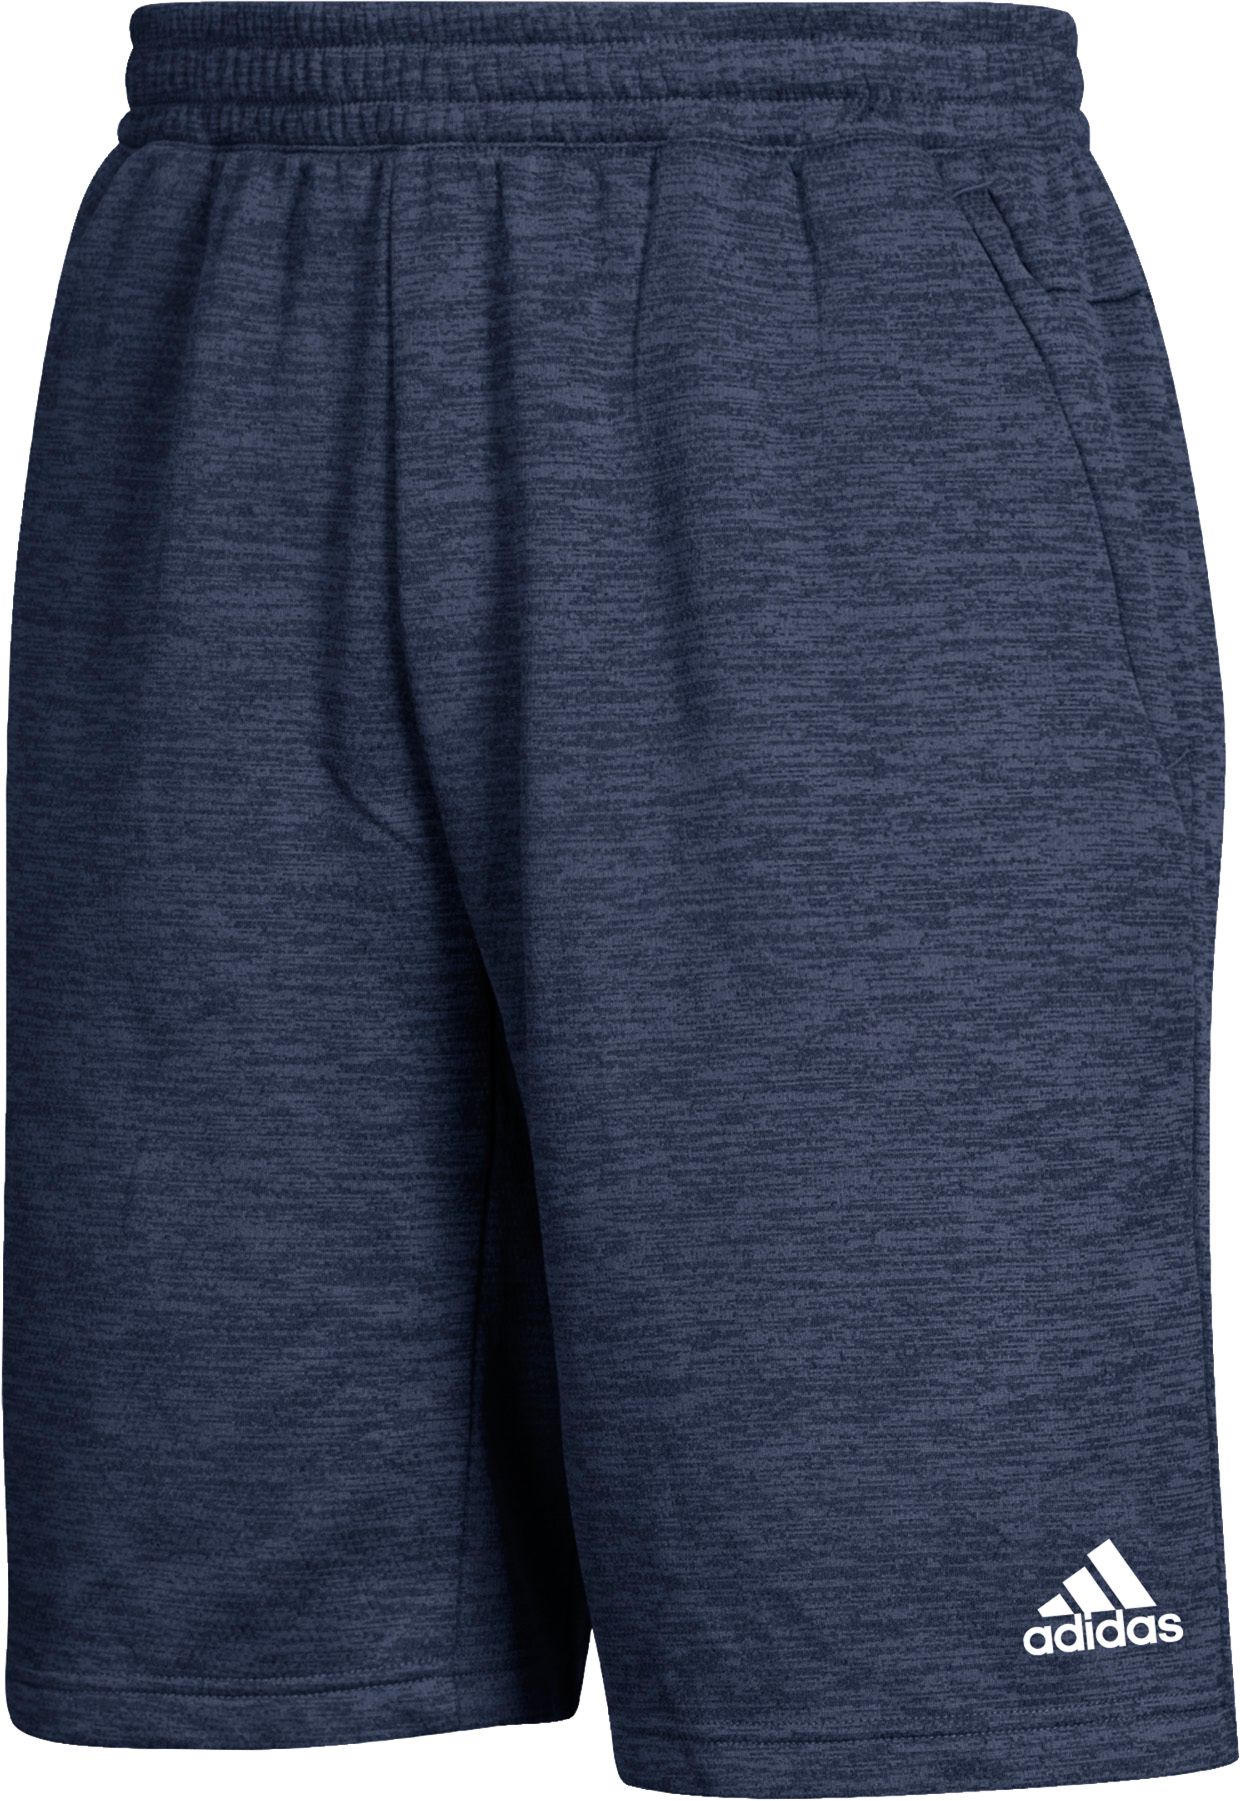 adidas originals fleece shorts mens